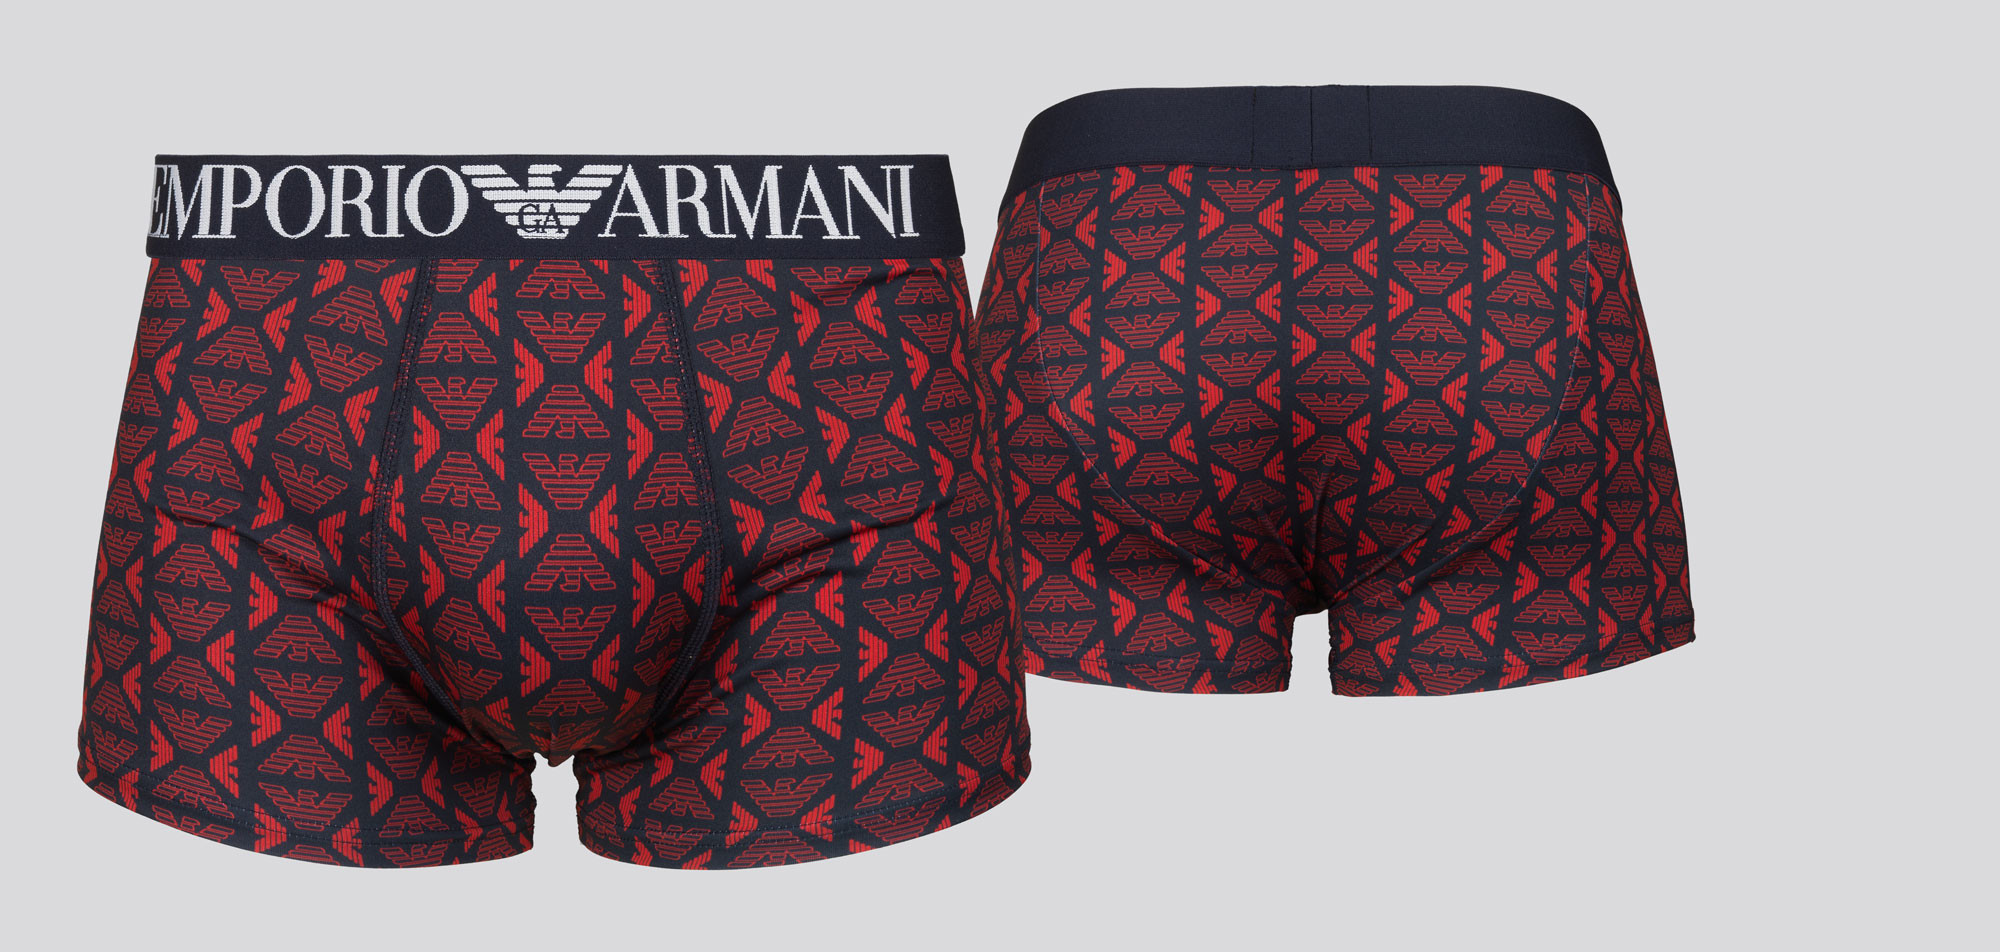 Emporio Armani Trunk Microfiber 3R535 Recycled Fabric, color Nee